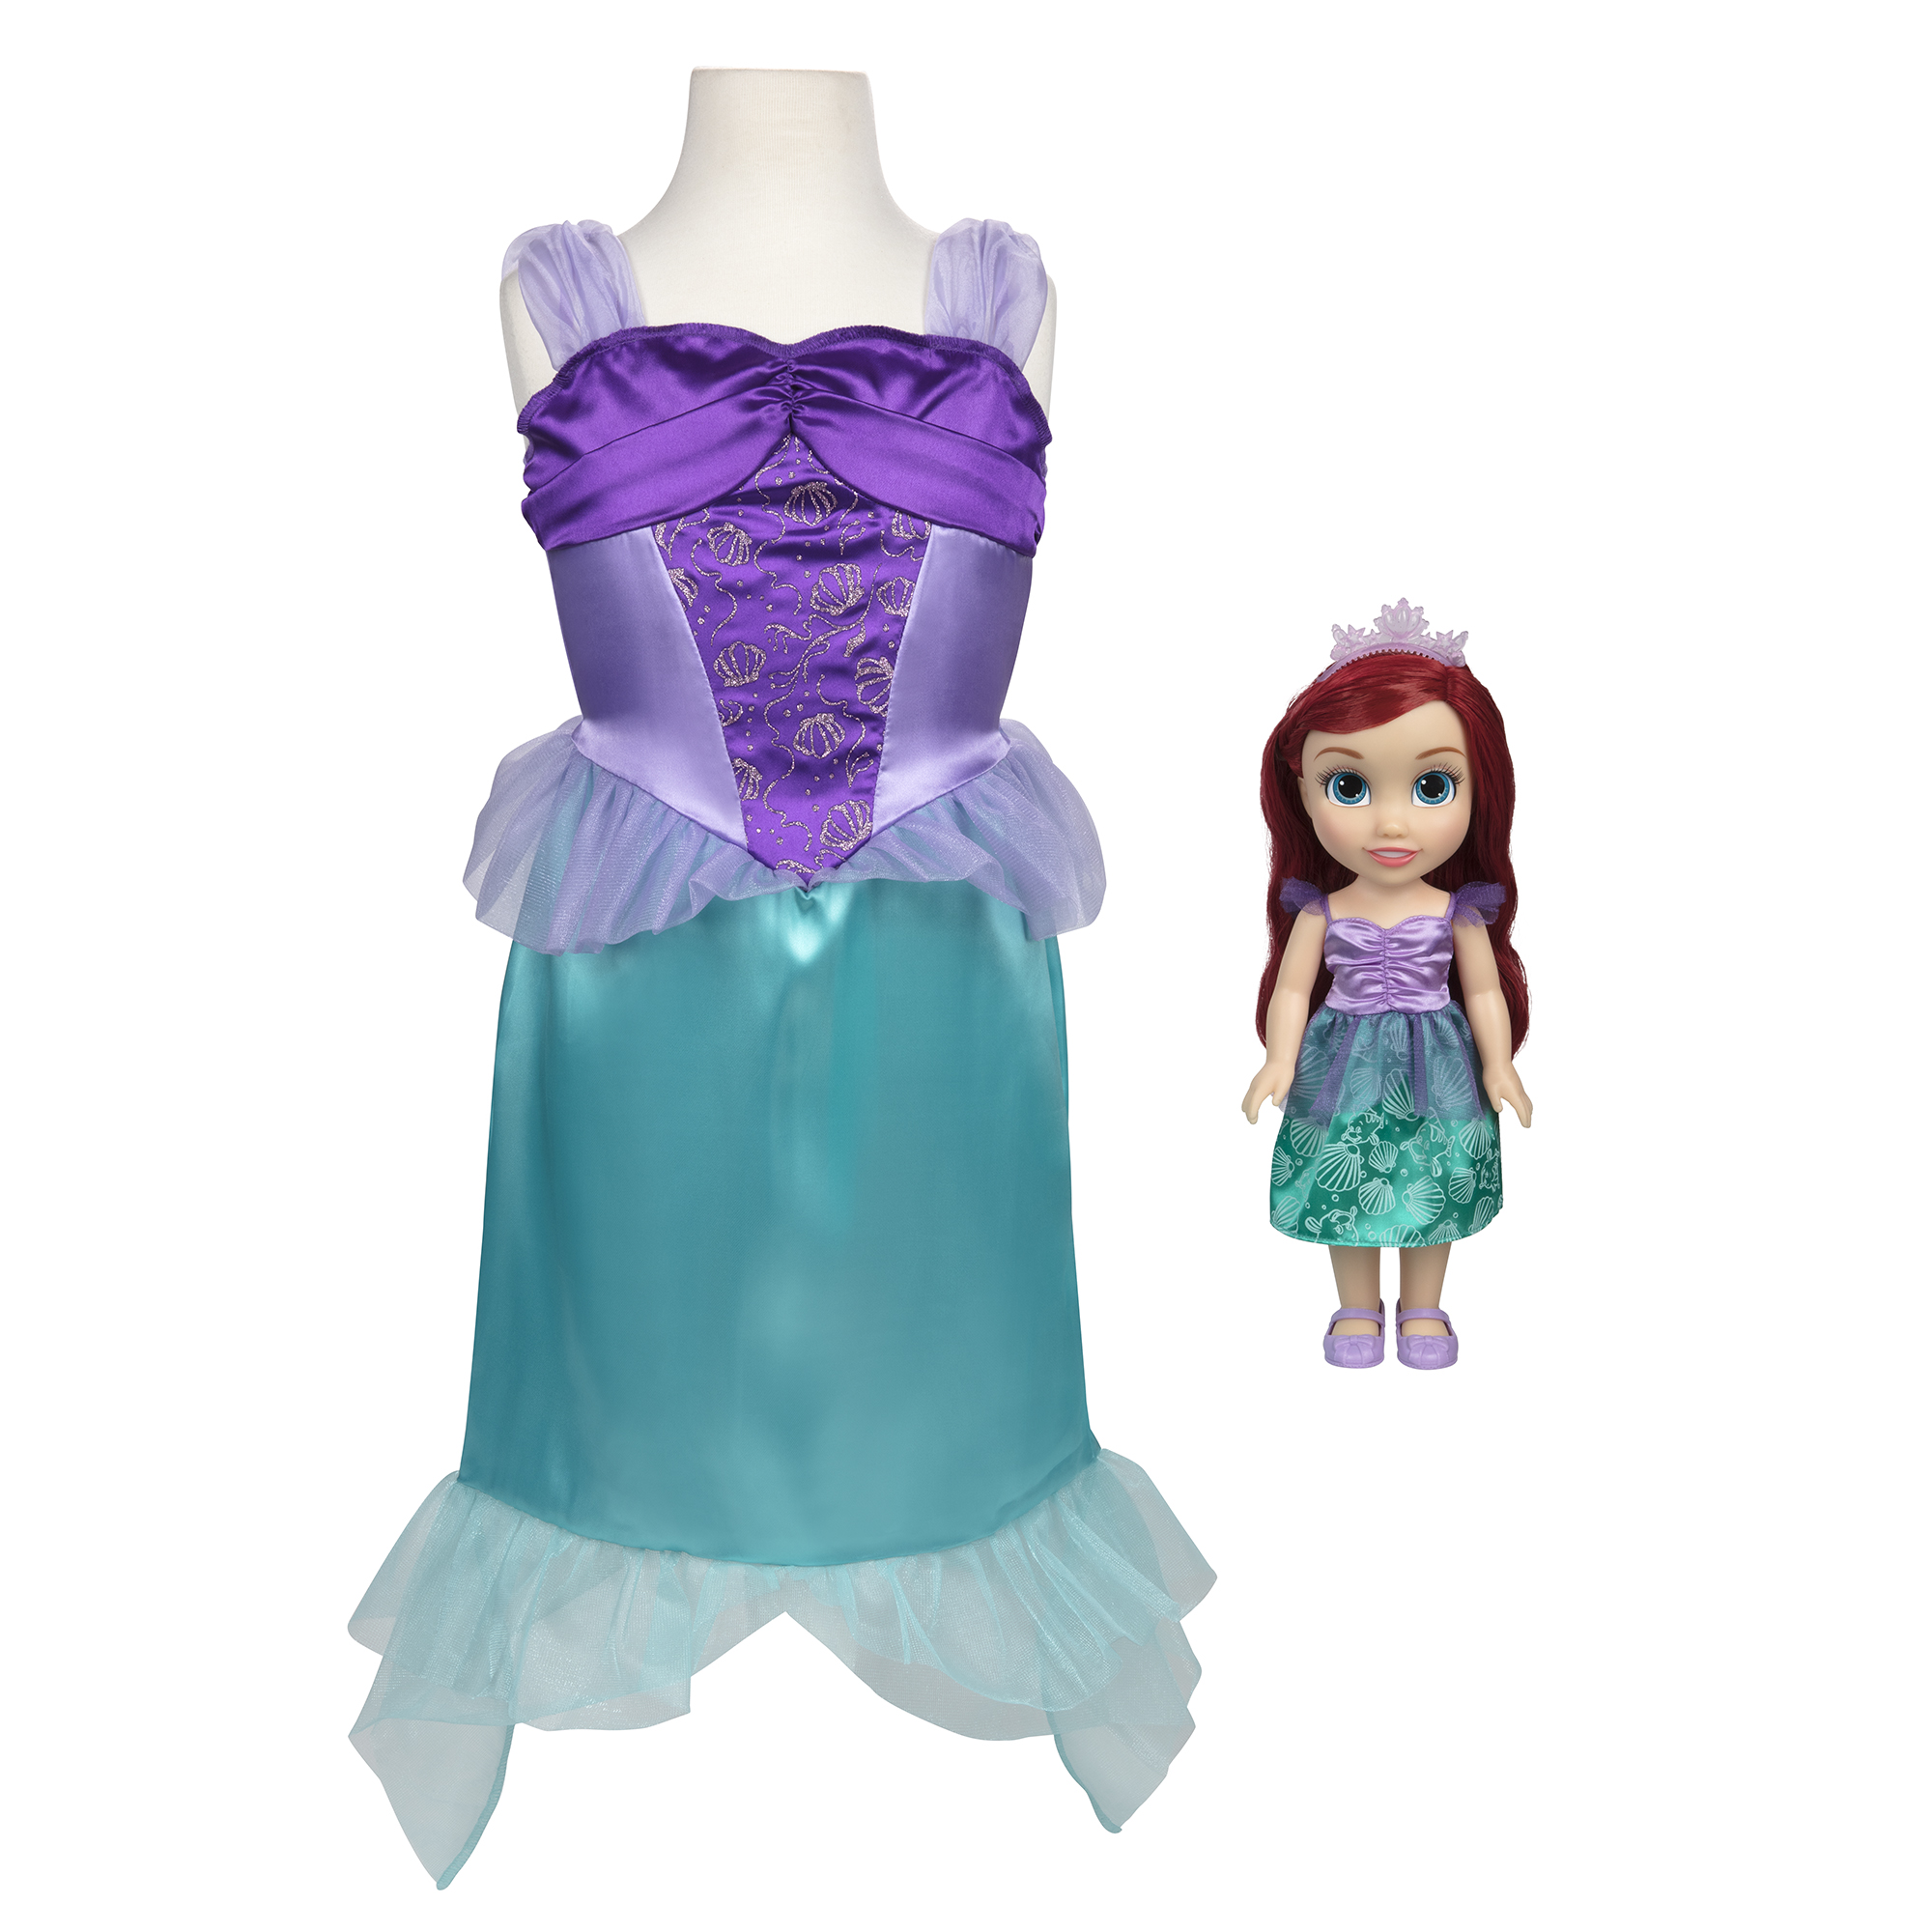 Disney Princess My Friend Ariel Doll with Child Size Dress Gift Set - image 1 of 8